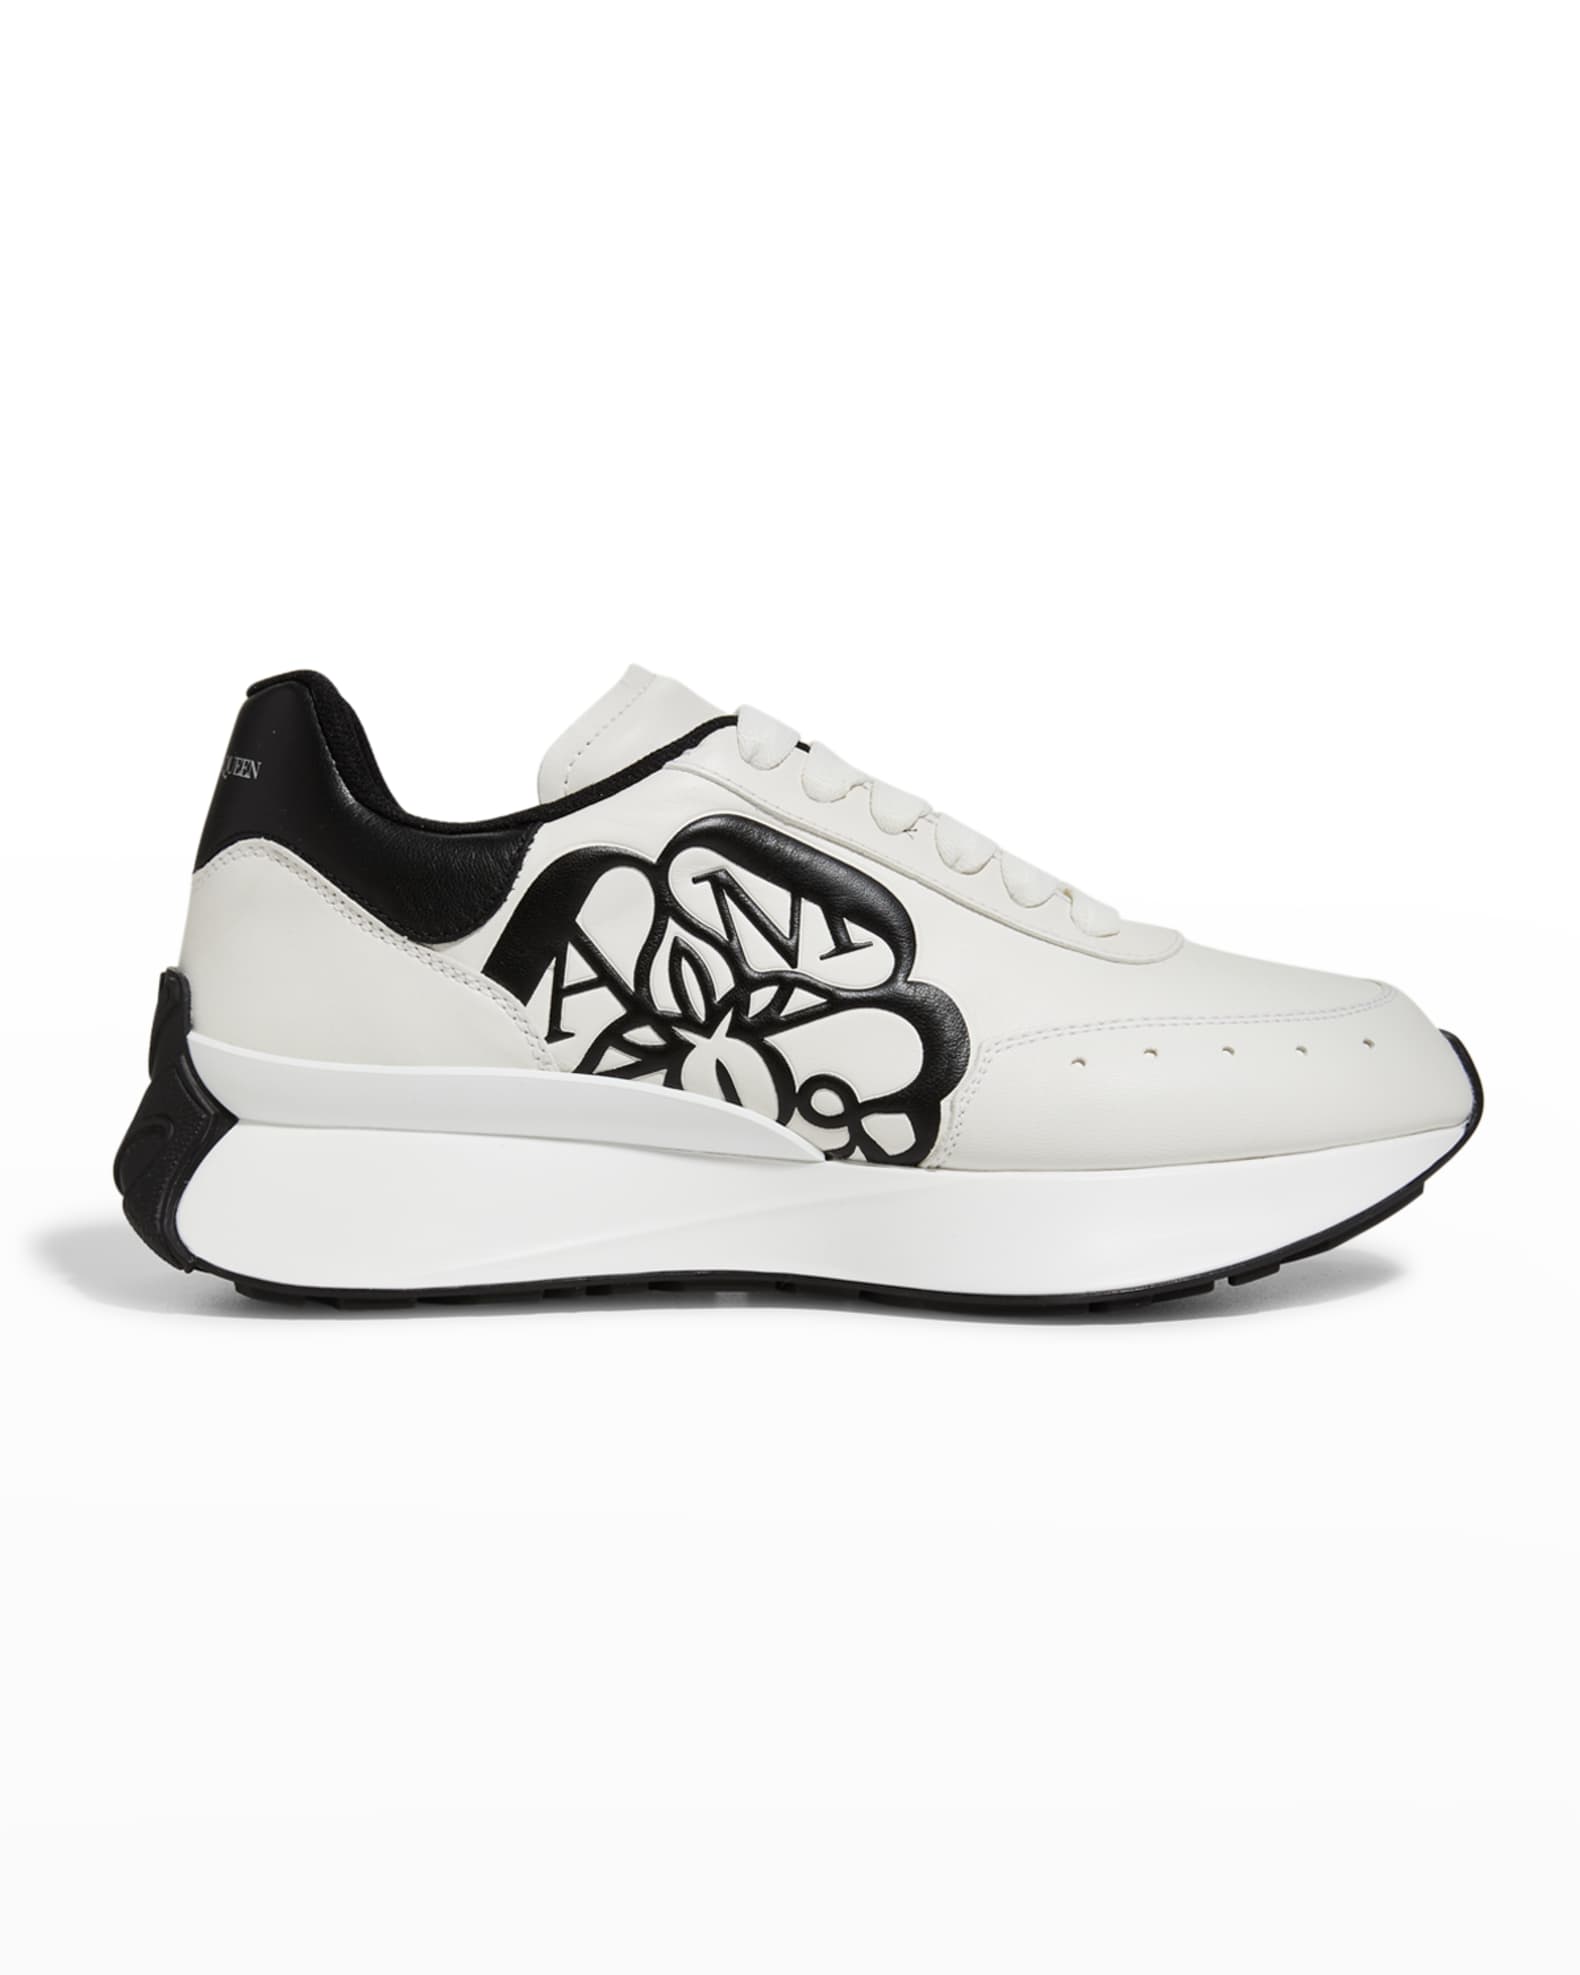 Louis Vuitton Men's Sprint Sneakers